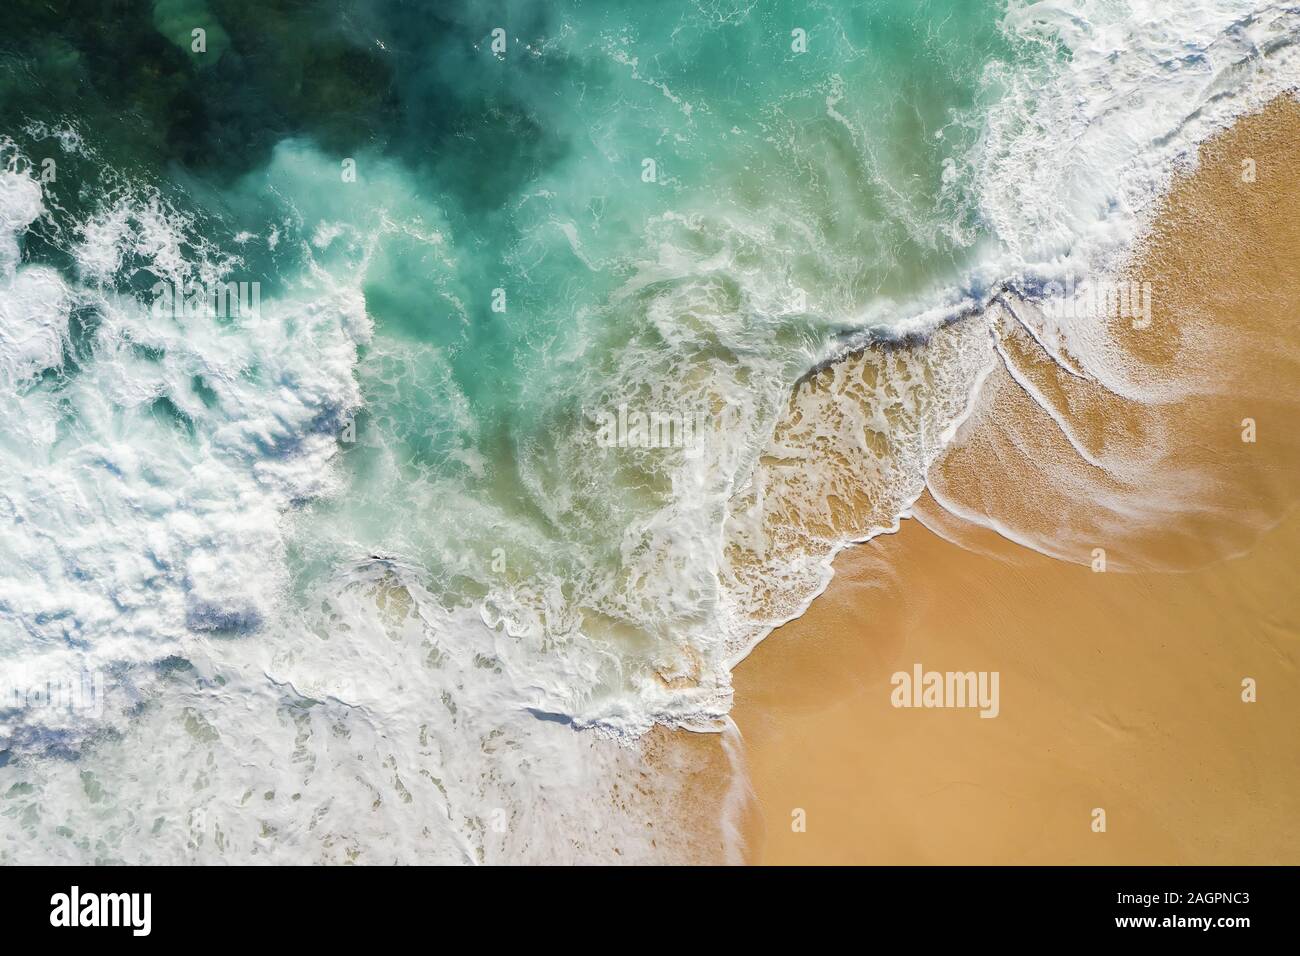 Nyang nyang beach hi-res stock photography and images - Alamy